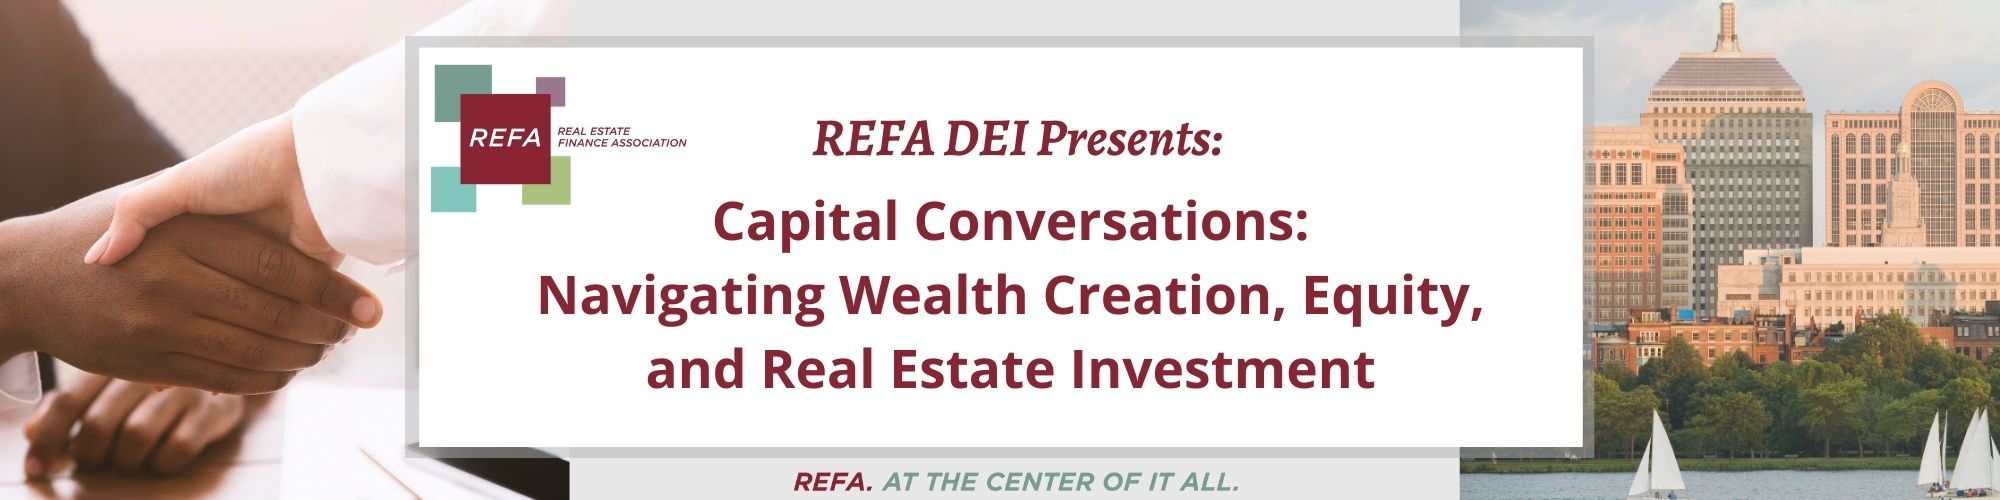 REFA DEI: Capital Conversations